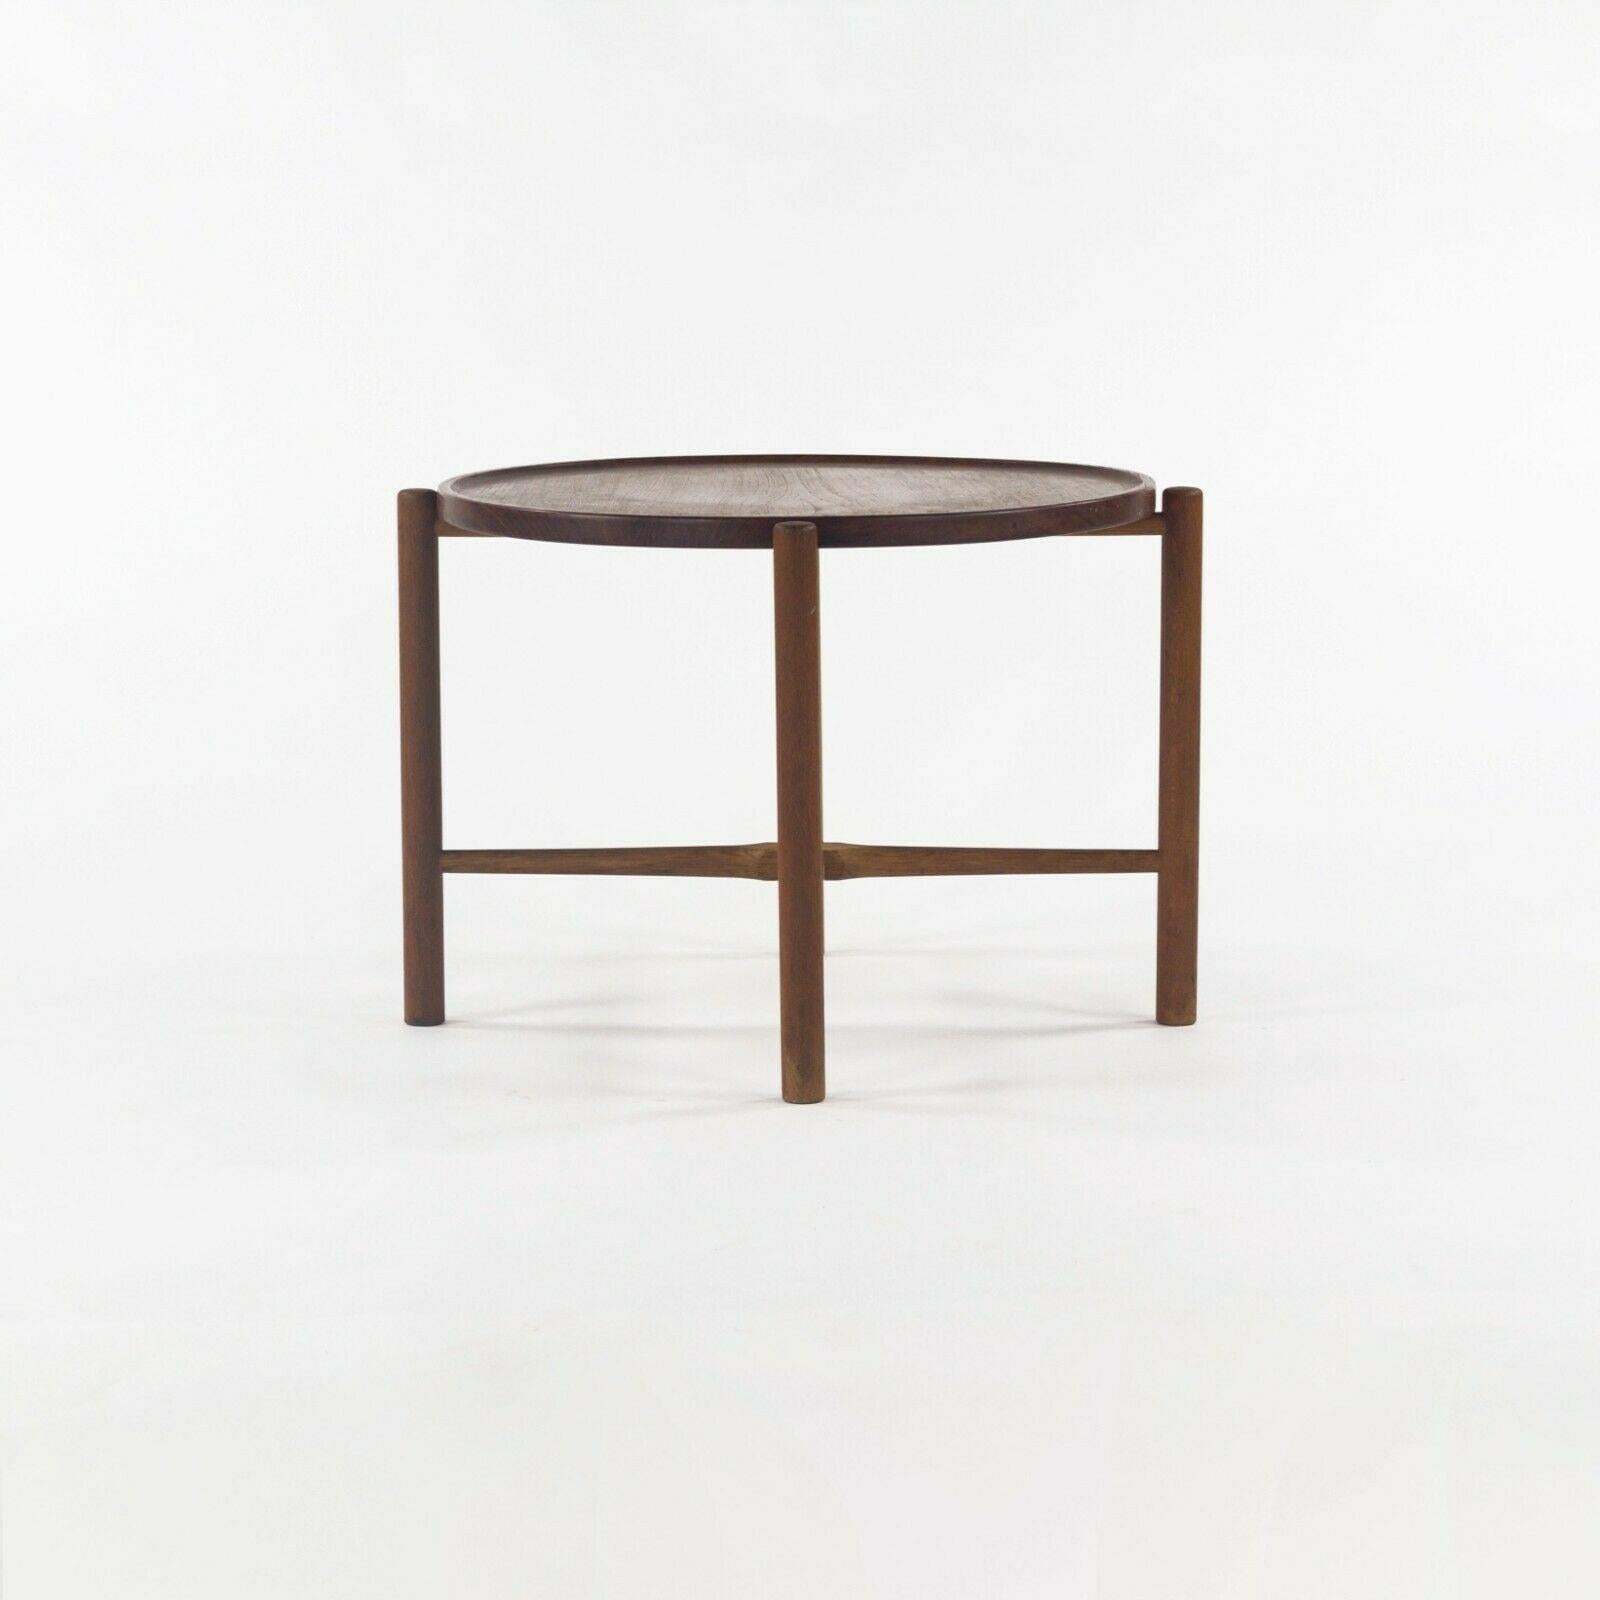 1960 PP35 Hans Wegner for &reas Tuck Folding Teak & Oak Side Table 2x Available In Good Condition For Sale In Philadelphia, PA